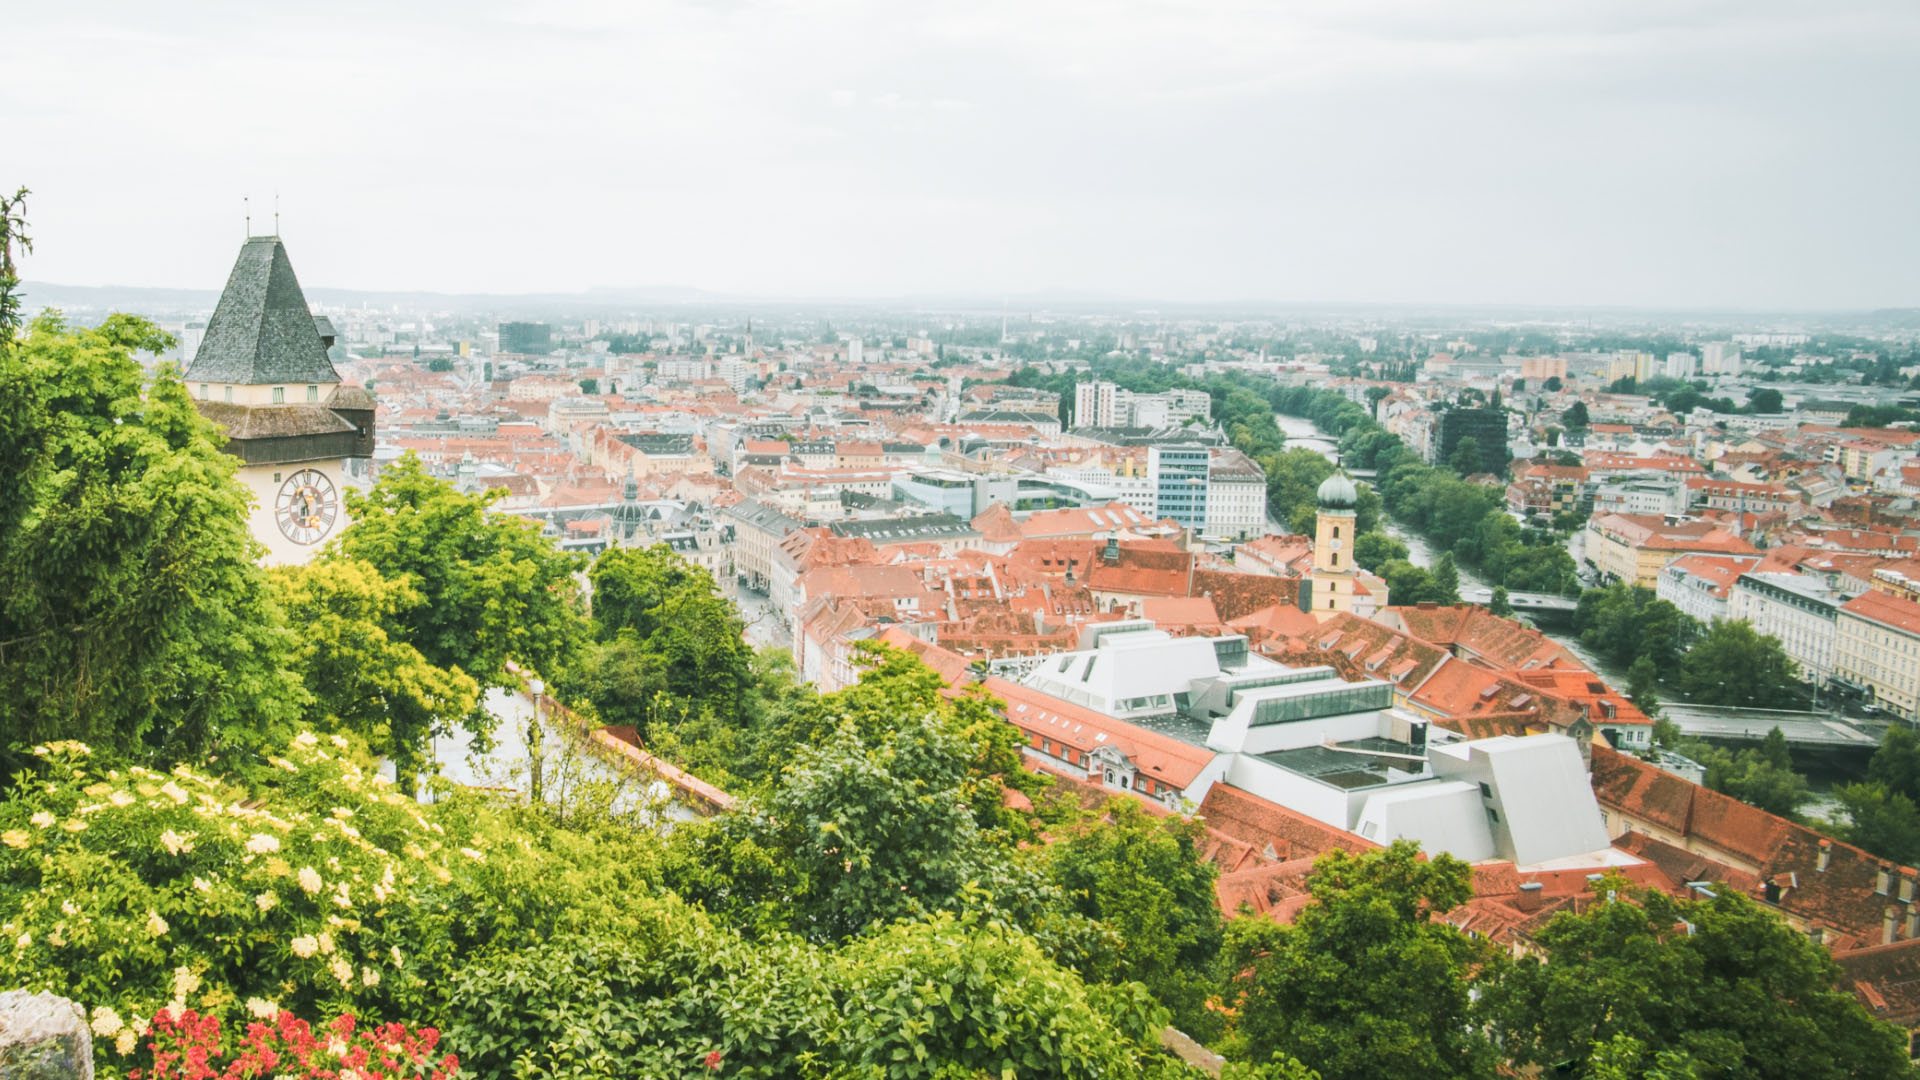 A view of the city of Ljubljana, Slovenia.